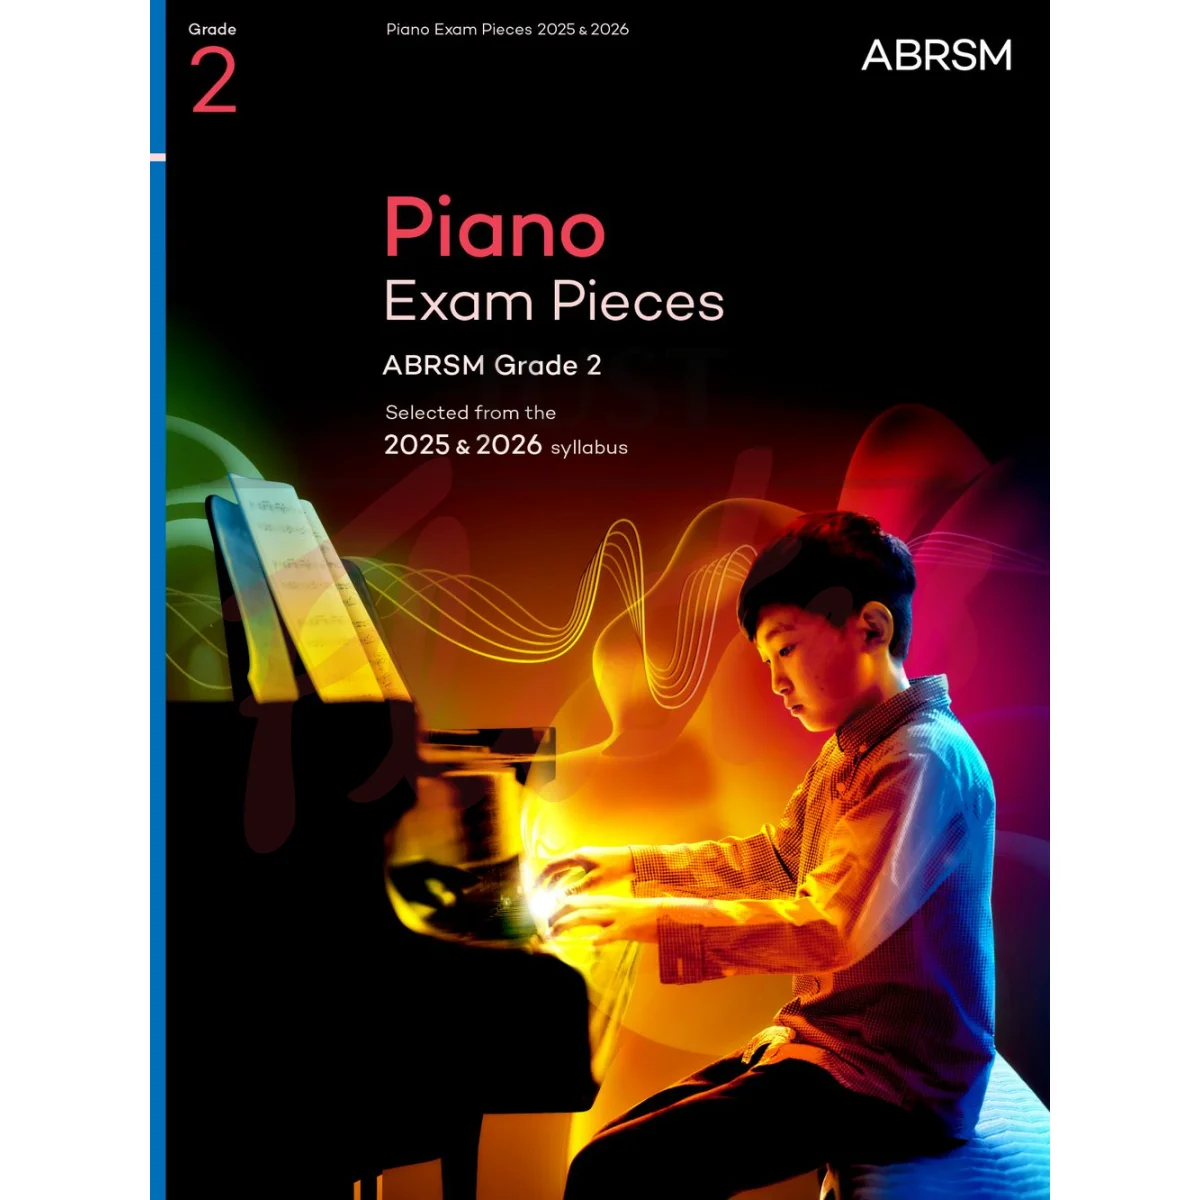 Piano Exam Pieces 2025-26, Grade 2